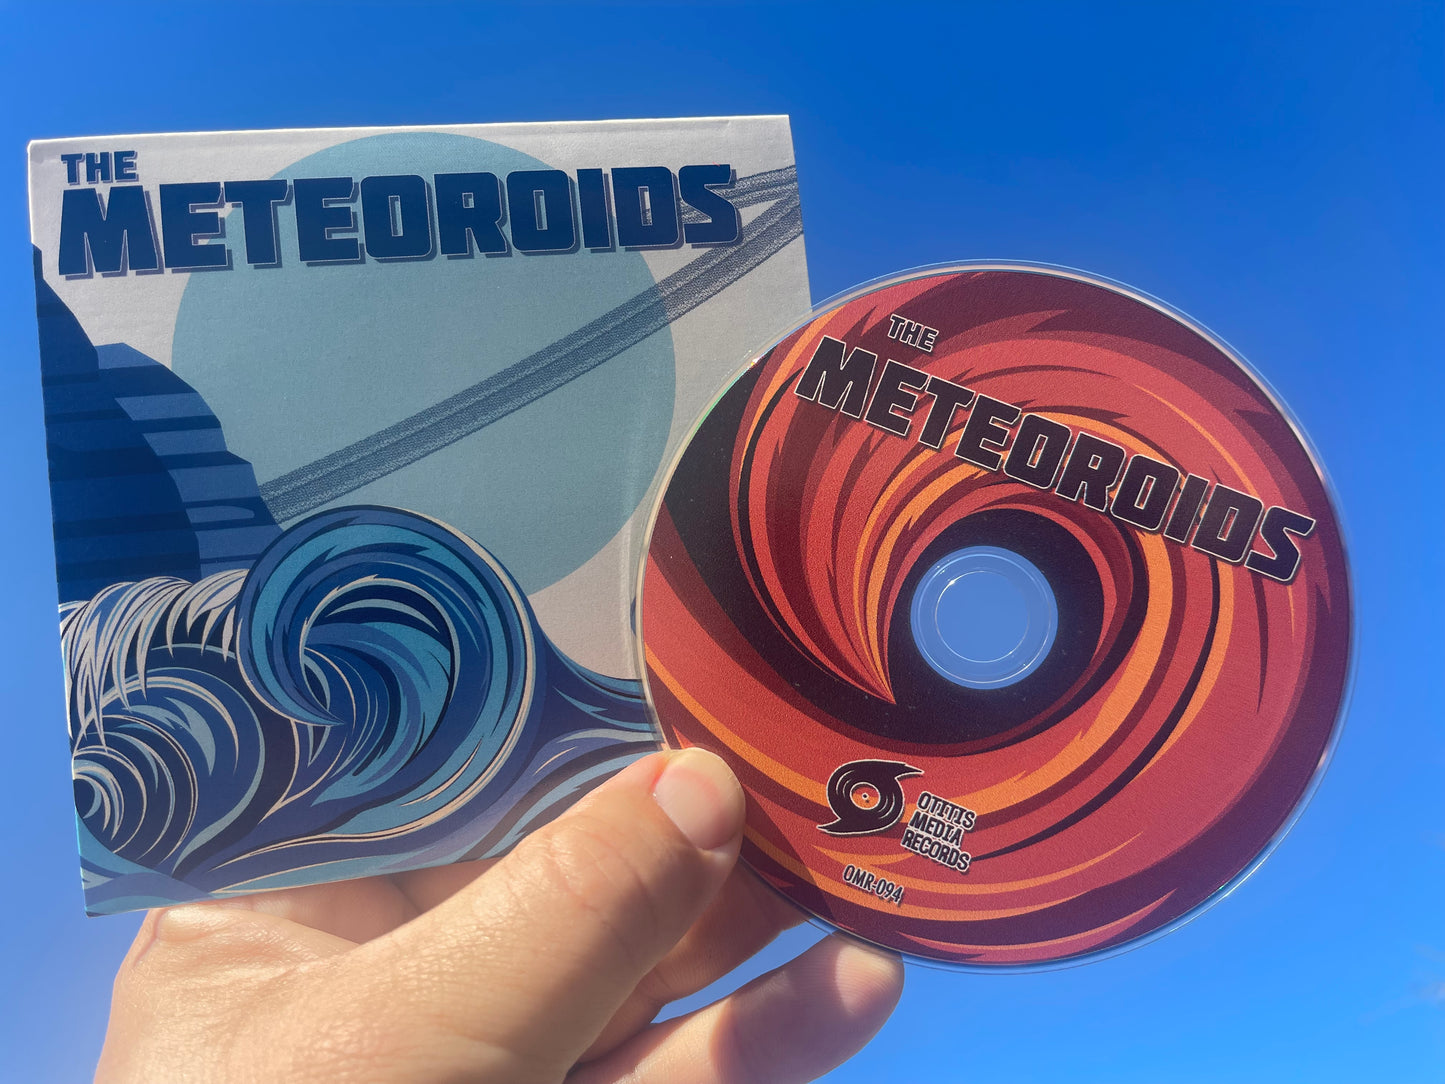 OMR-094 The Meteoroids CD